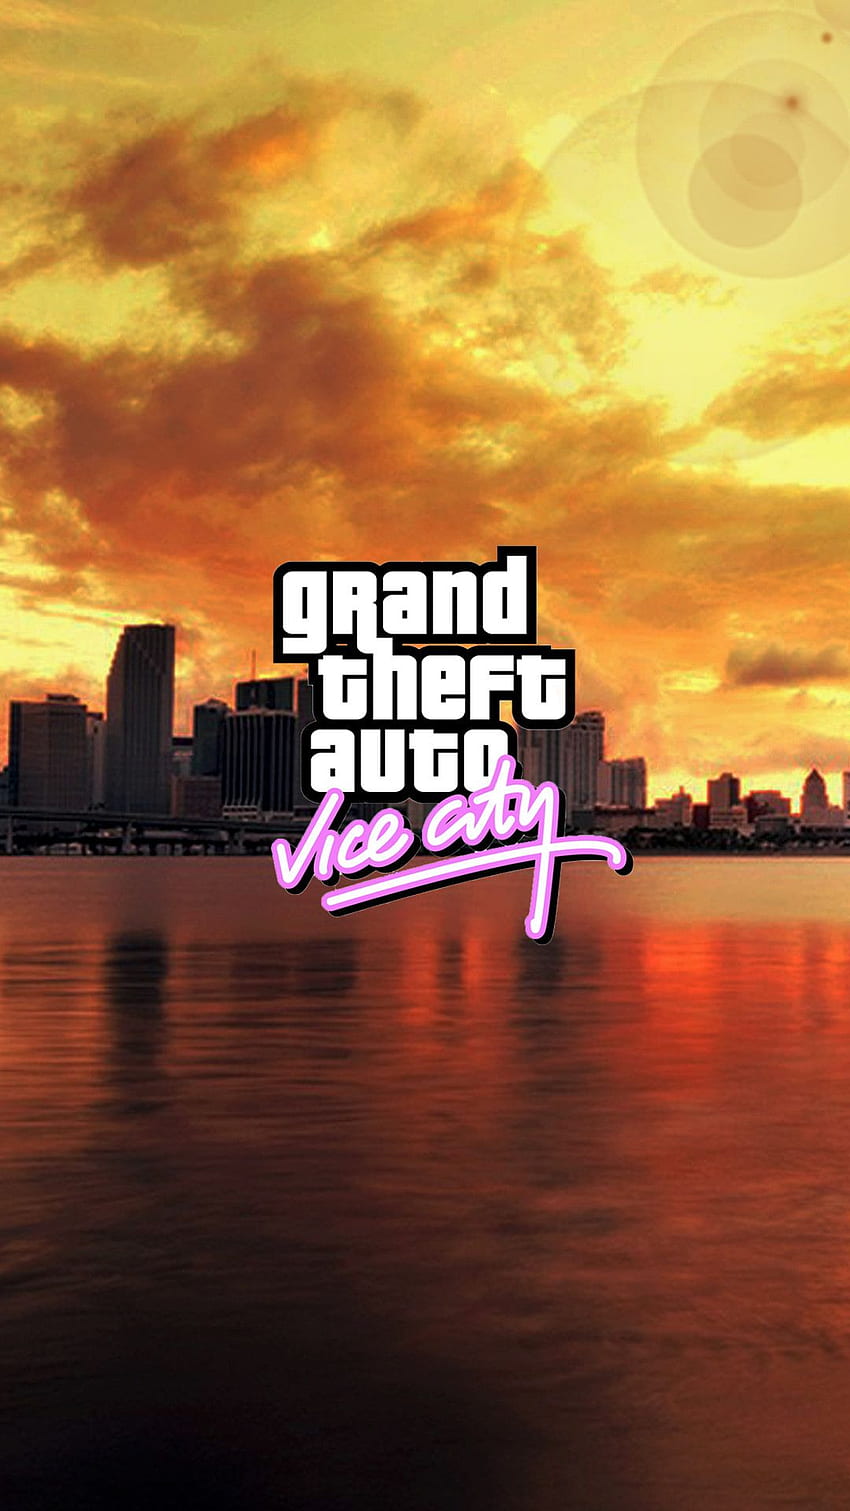 Vice City - Gta Vice City - - - Tip, GTA VCS HD phone wallpaper